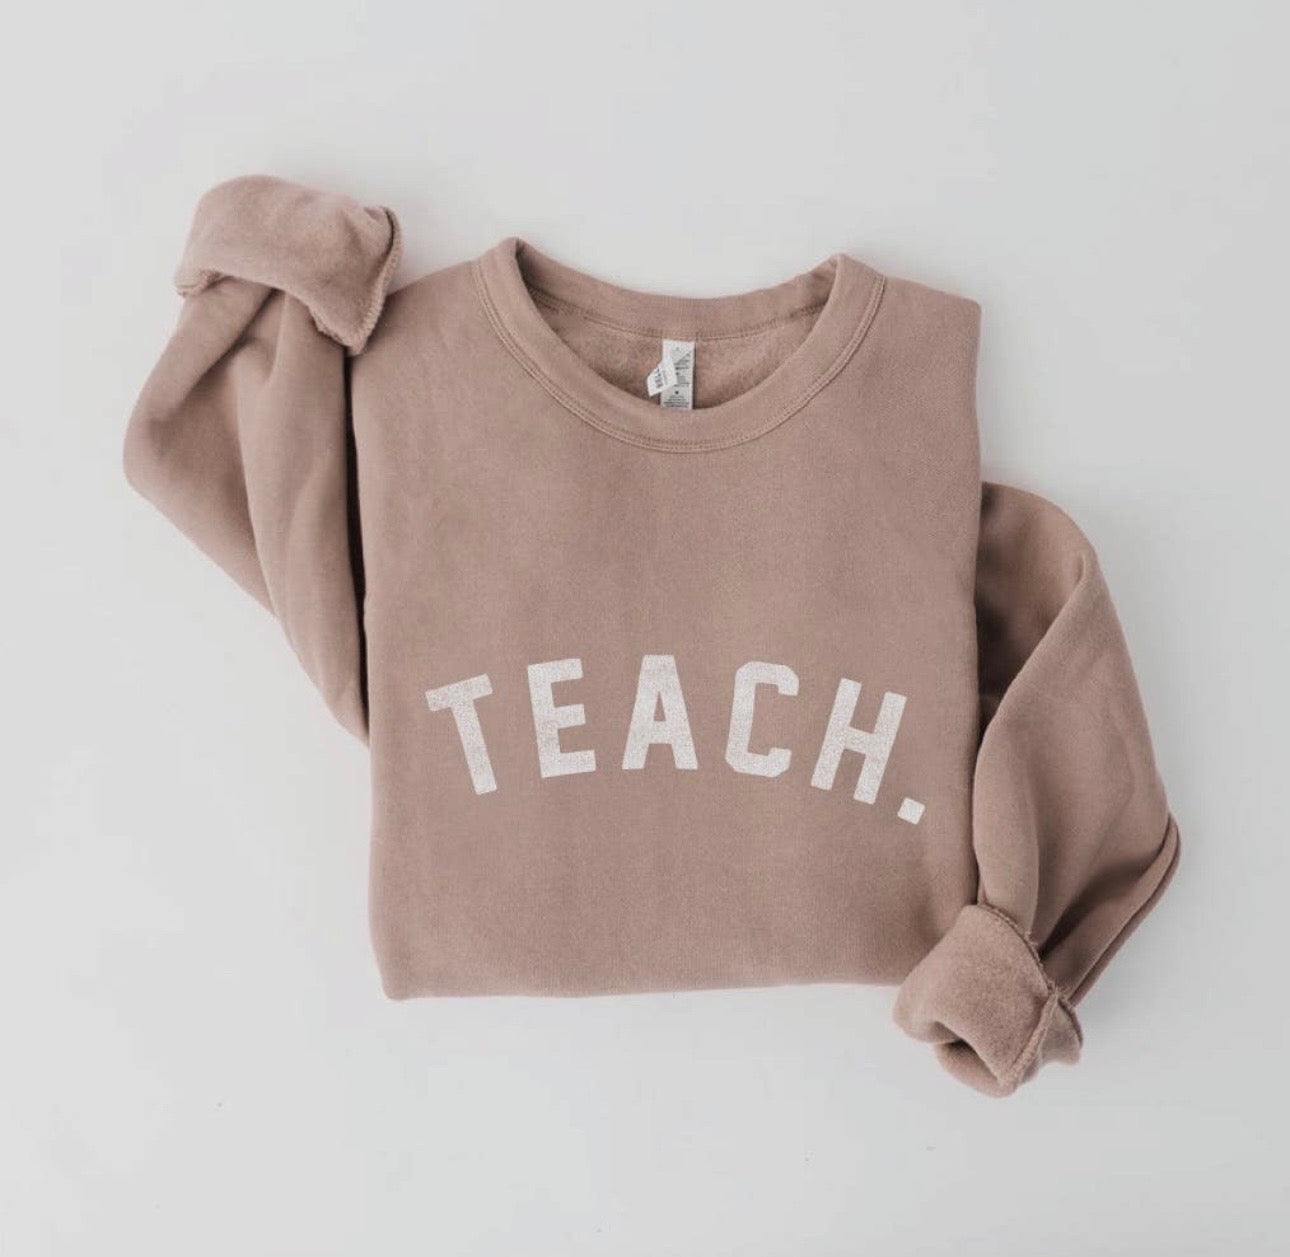 Teach sweatshirt